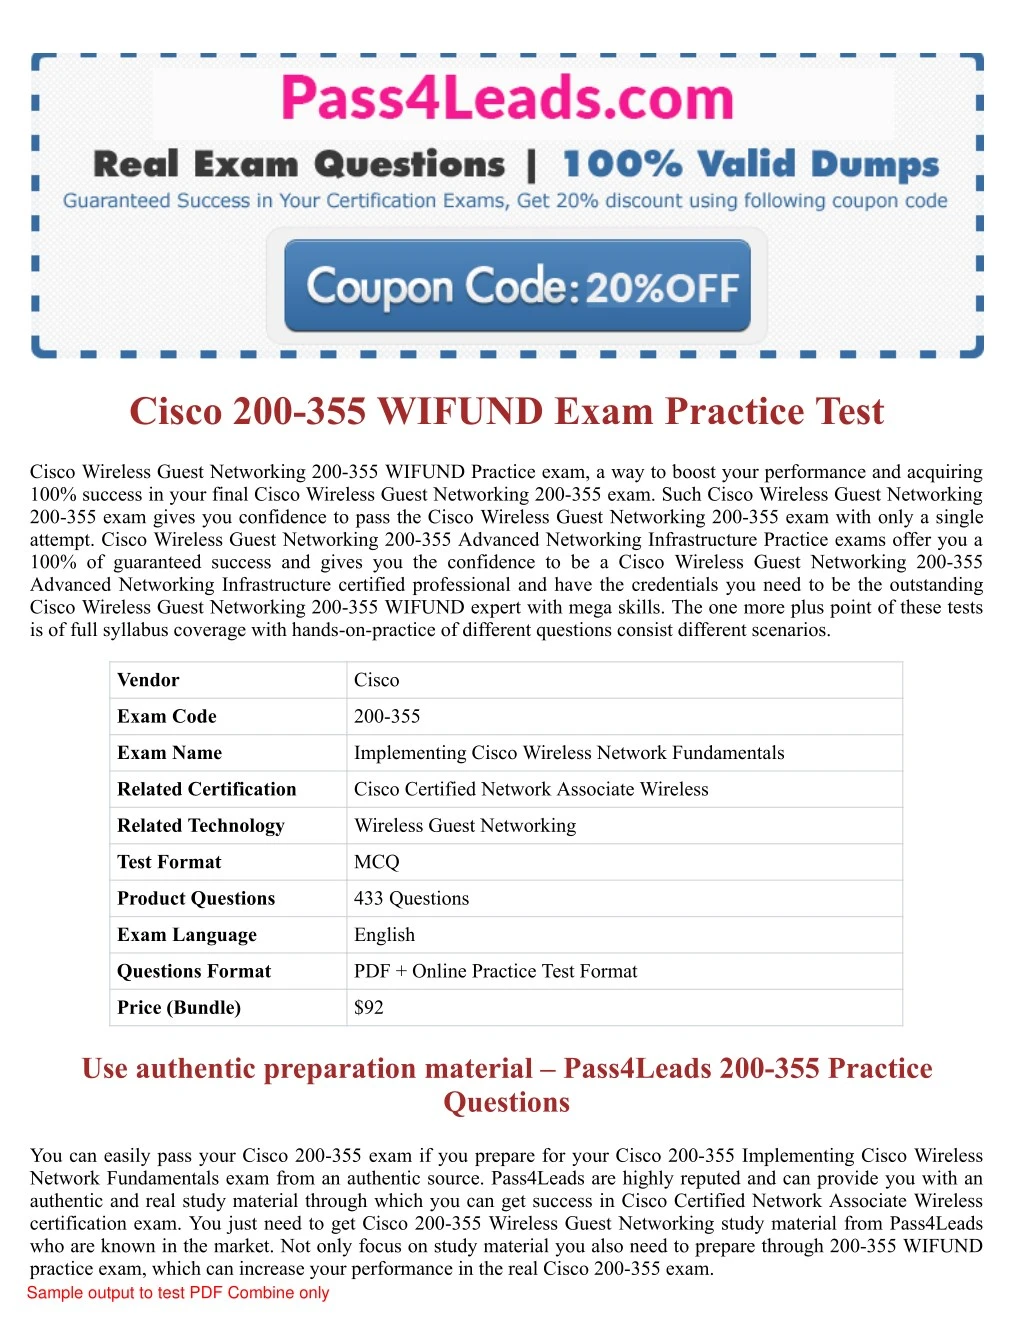 cisco 200 355 wifund exam practice test